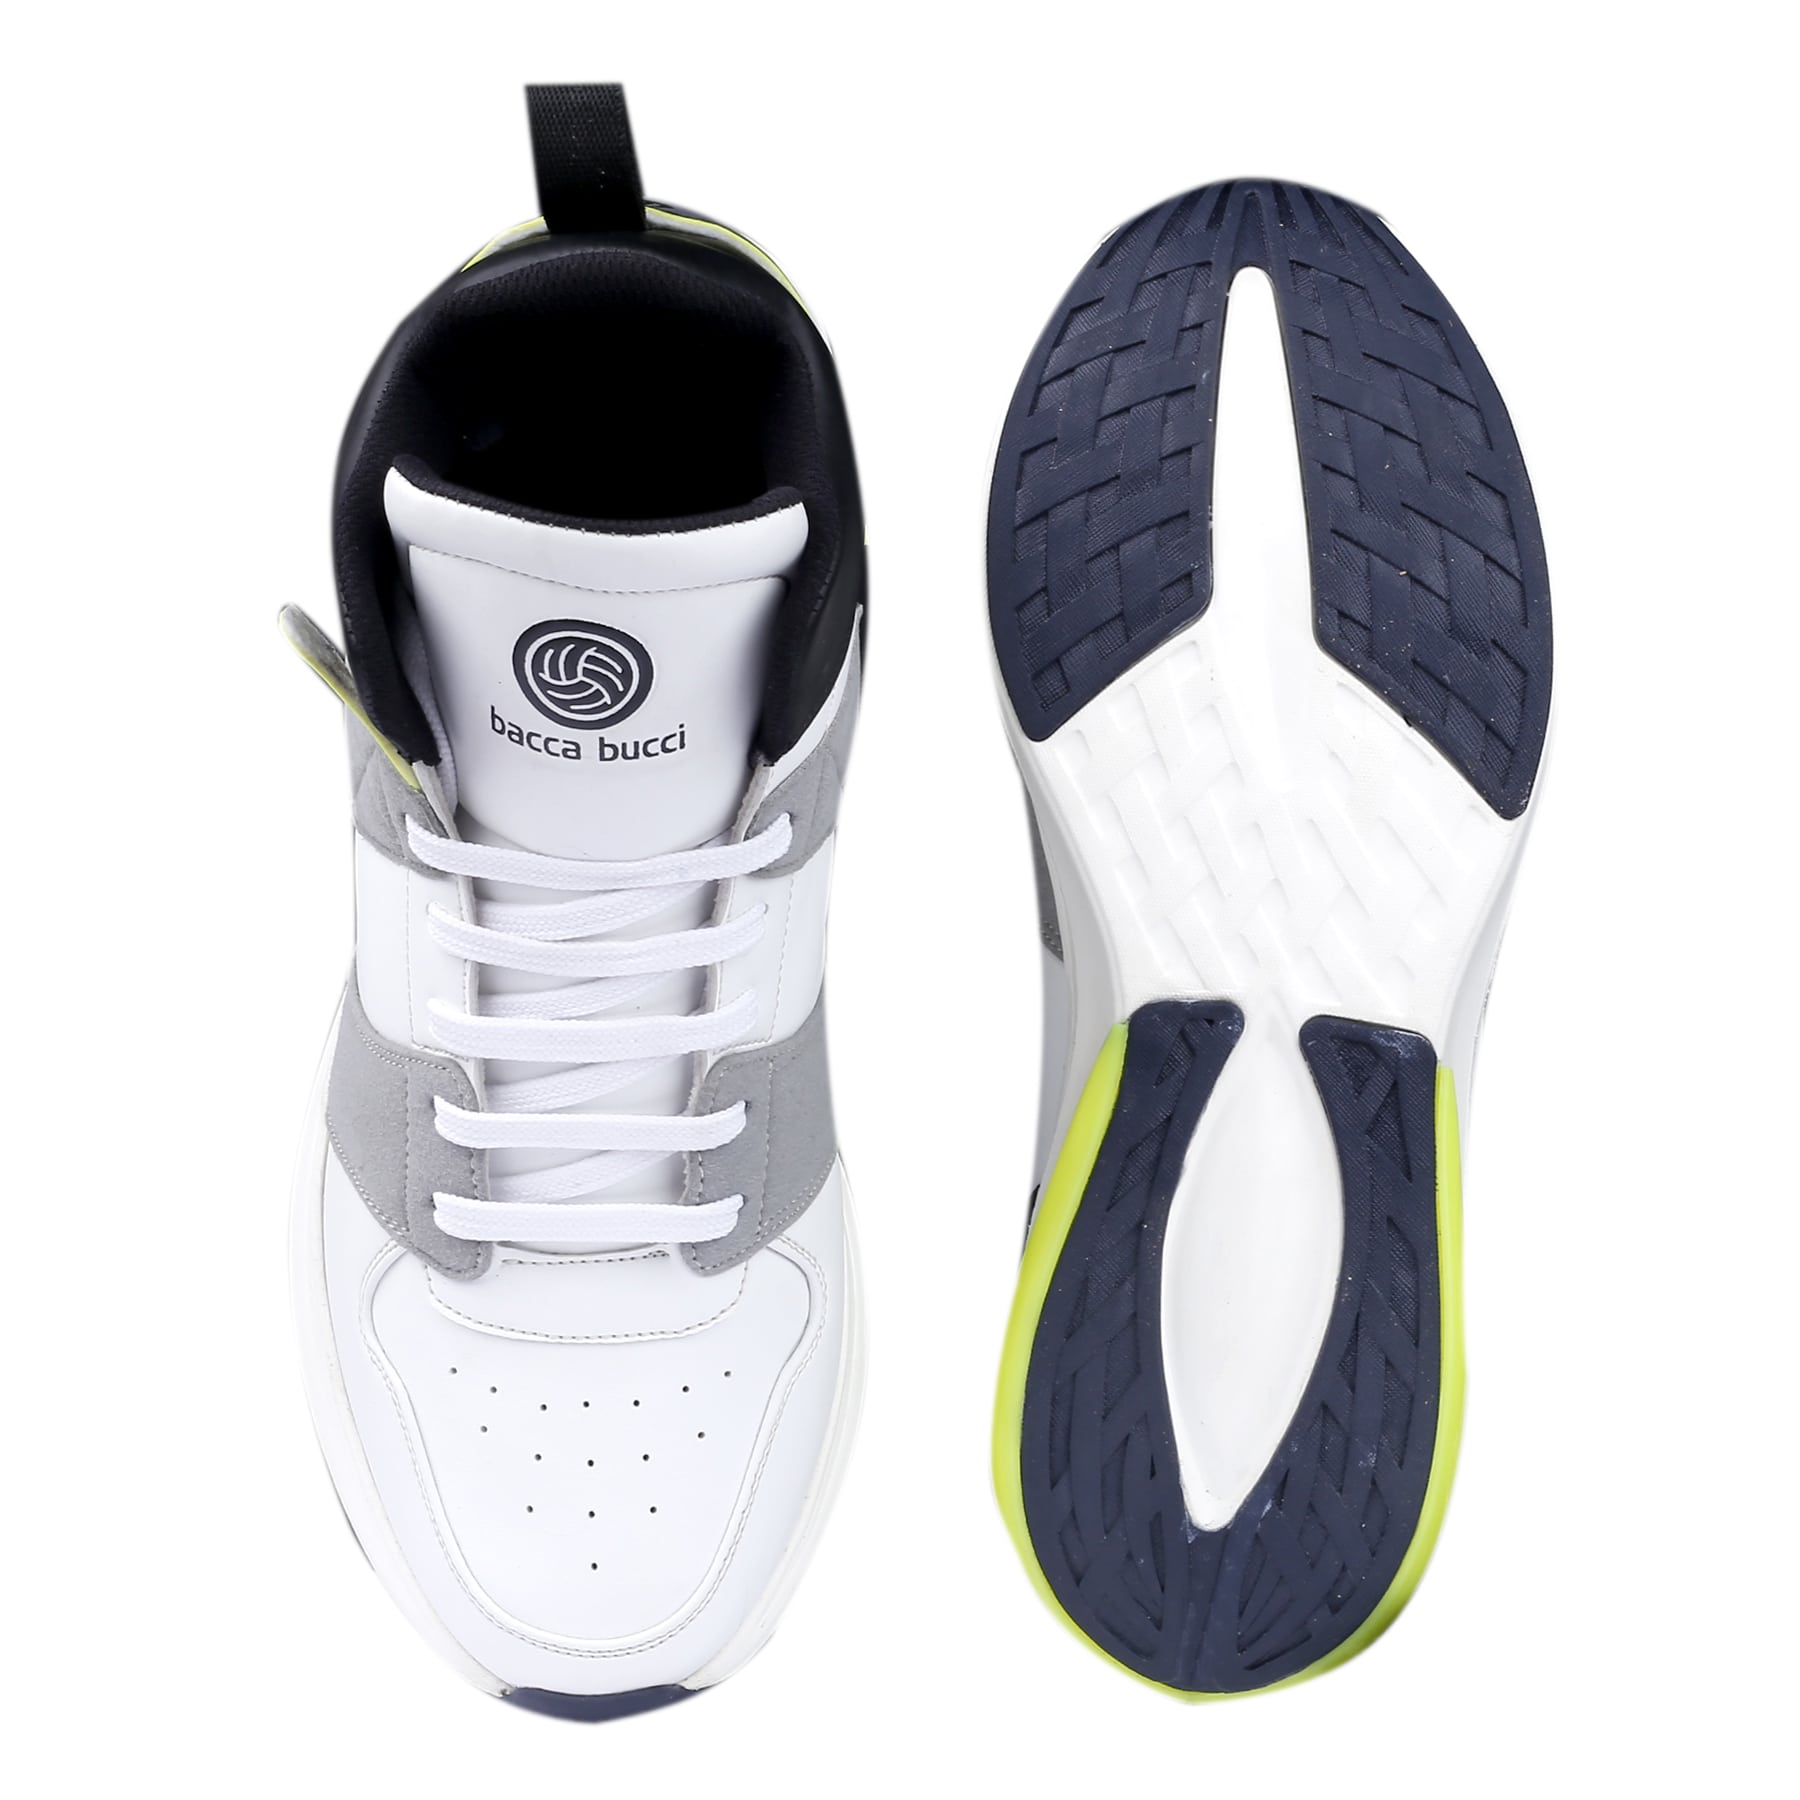 Bacca Bucci UNICORN Men's Fashion Hi-Top Sneakers Street Wear with Dual Air Cushion Rubber Outsole